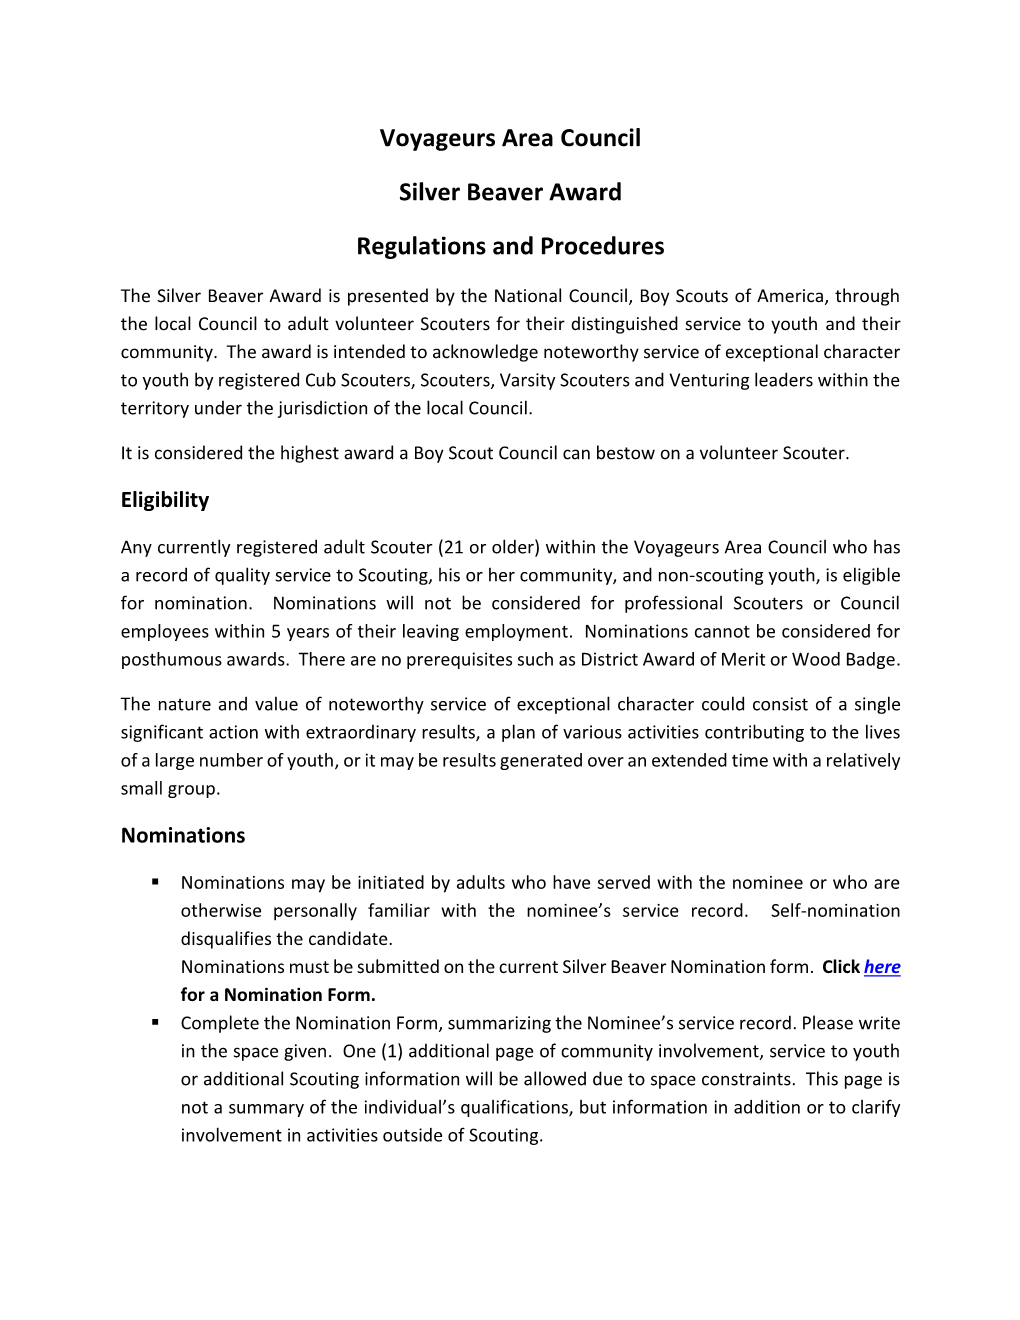 Voyageurs Area Council Silver Beaver Award Regulations and Procedures